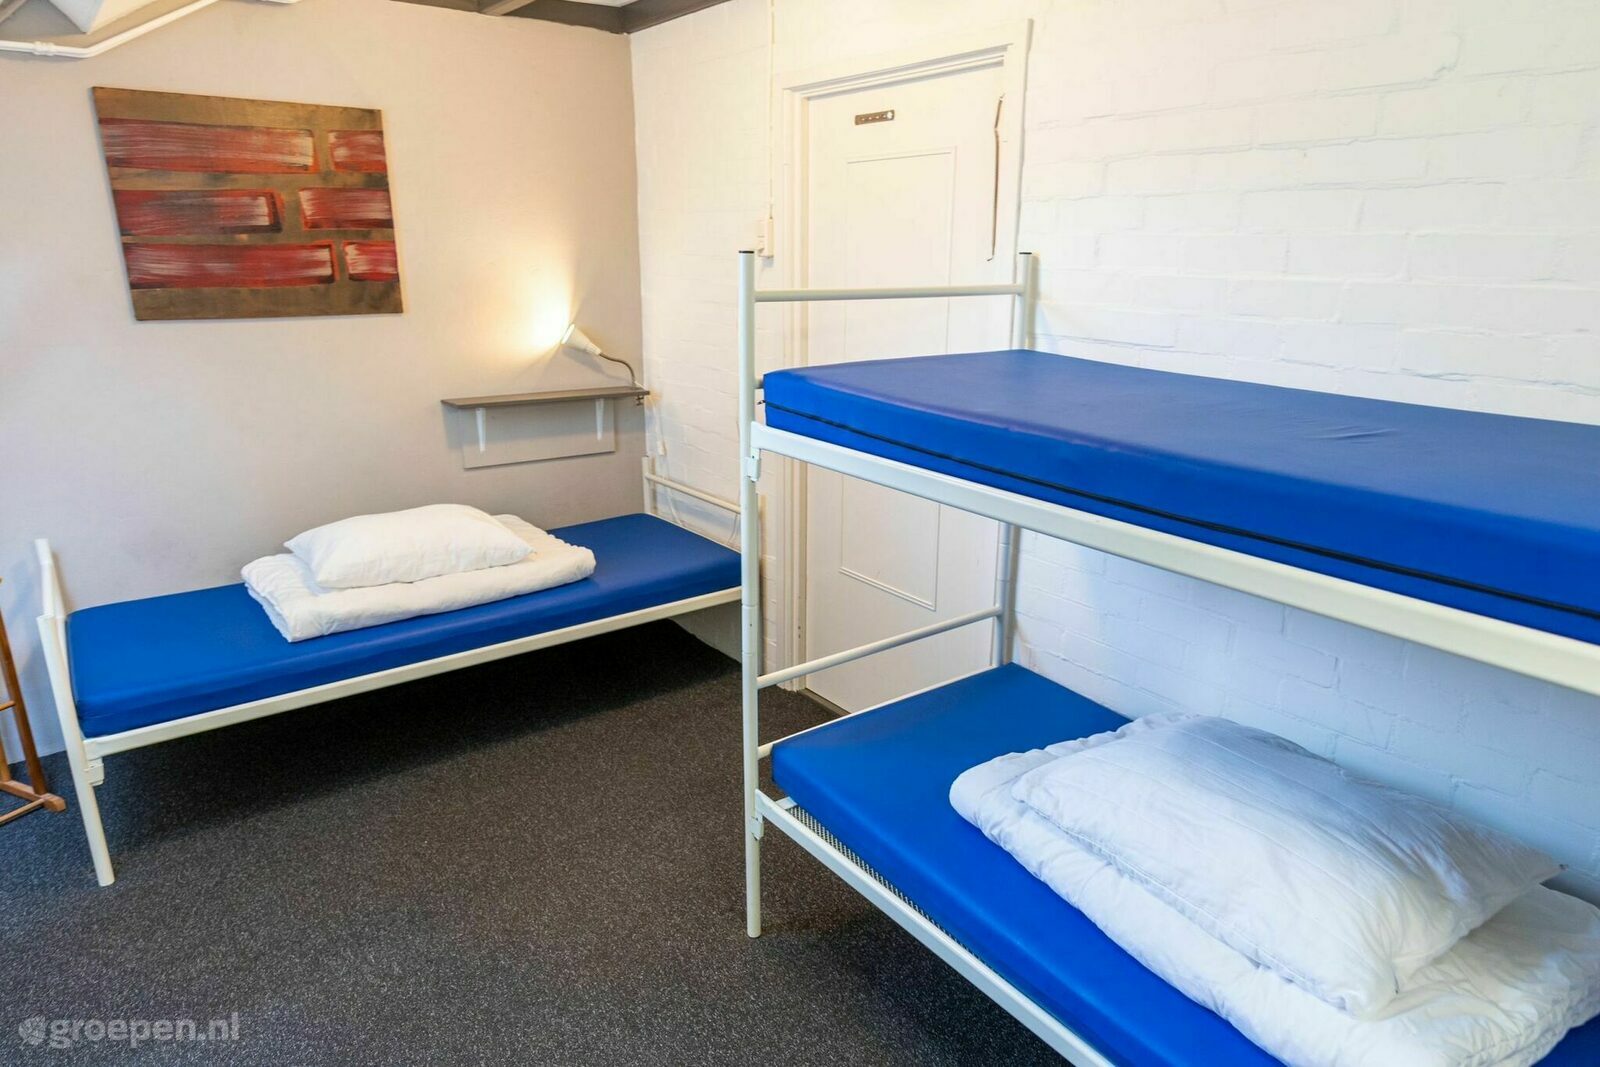 Group accommodation Wehe den Hoorn